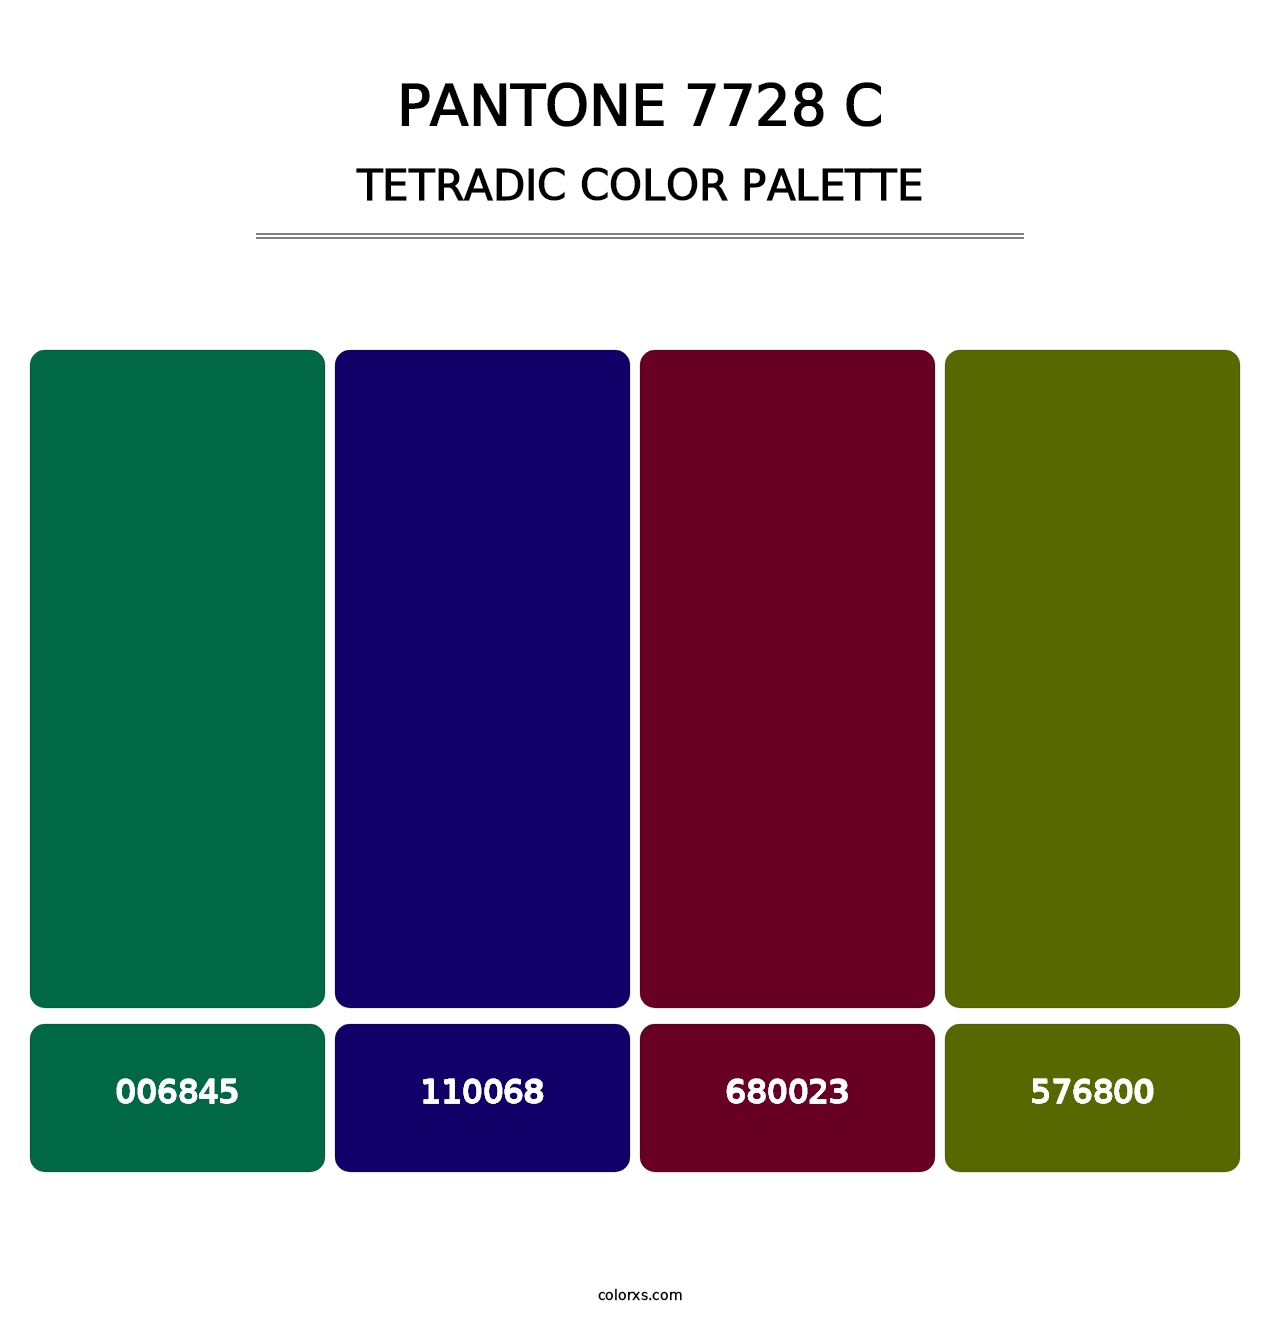 PANTONE 7728 C - Tetradic Color Palette